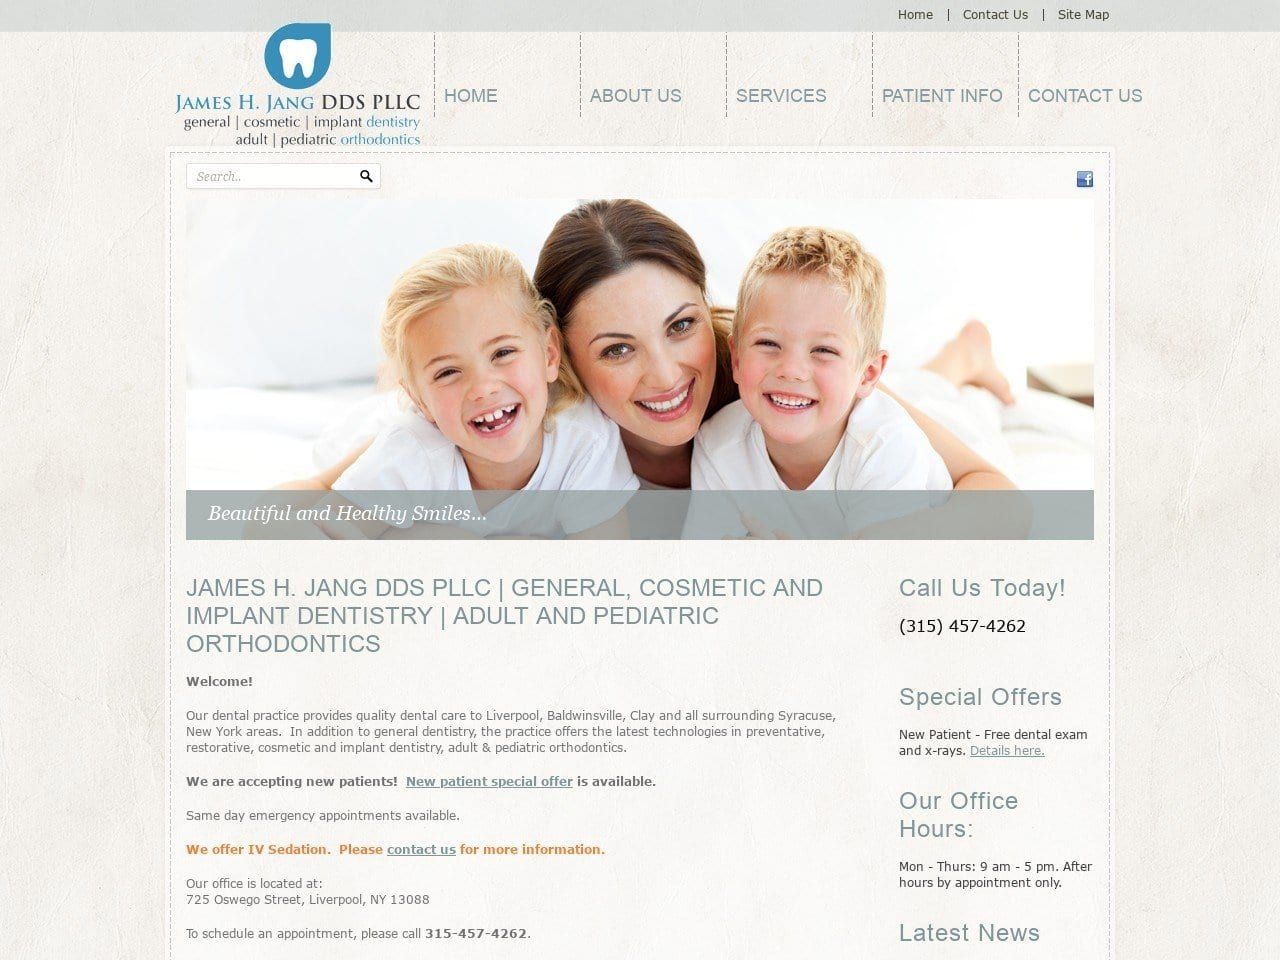 James H. Jang DDS PLLC Website Screenshot from jamesjangdds.com